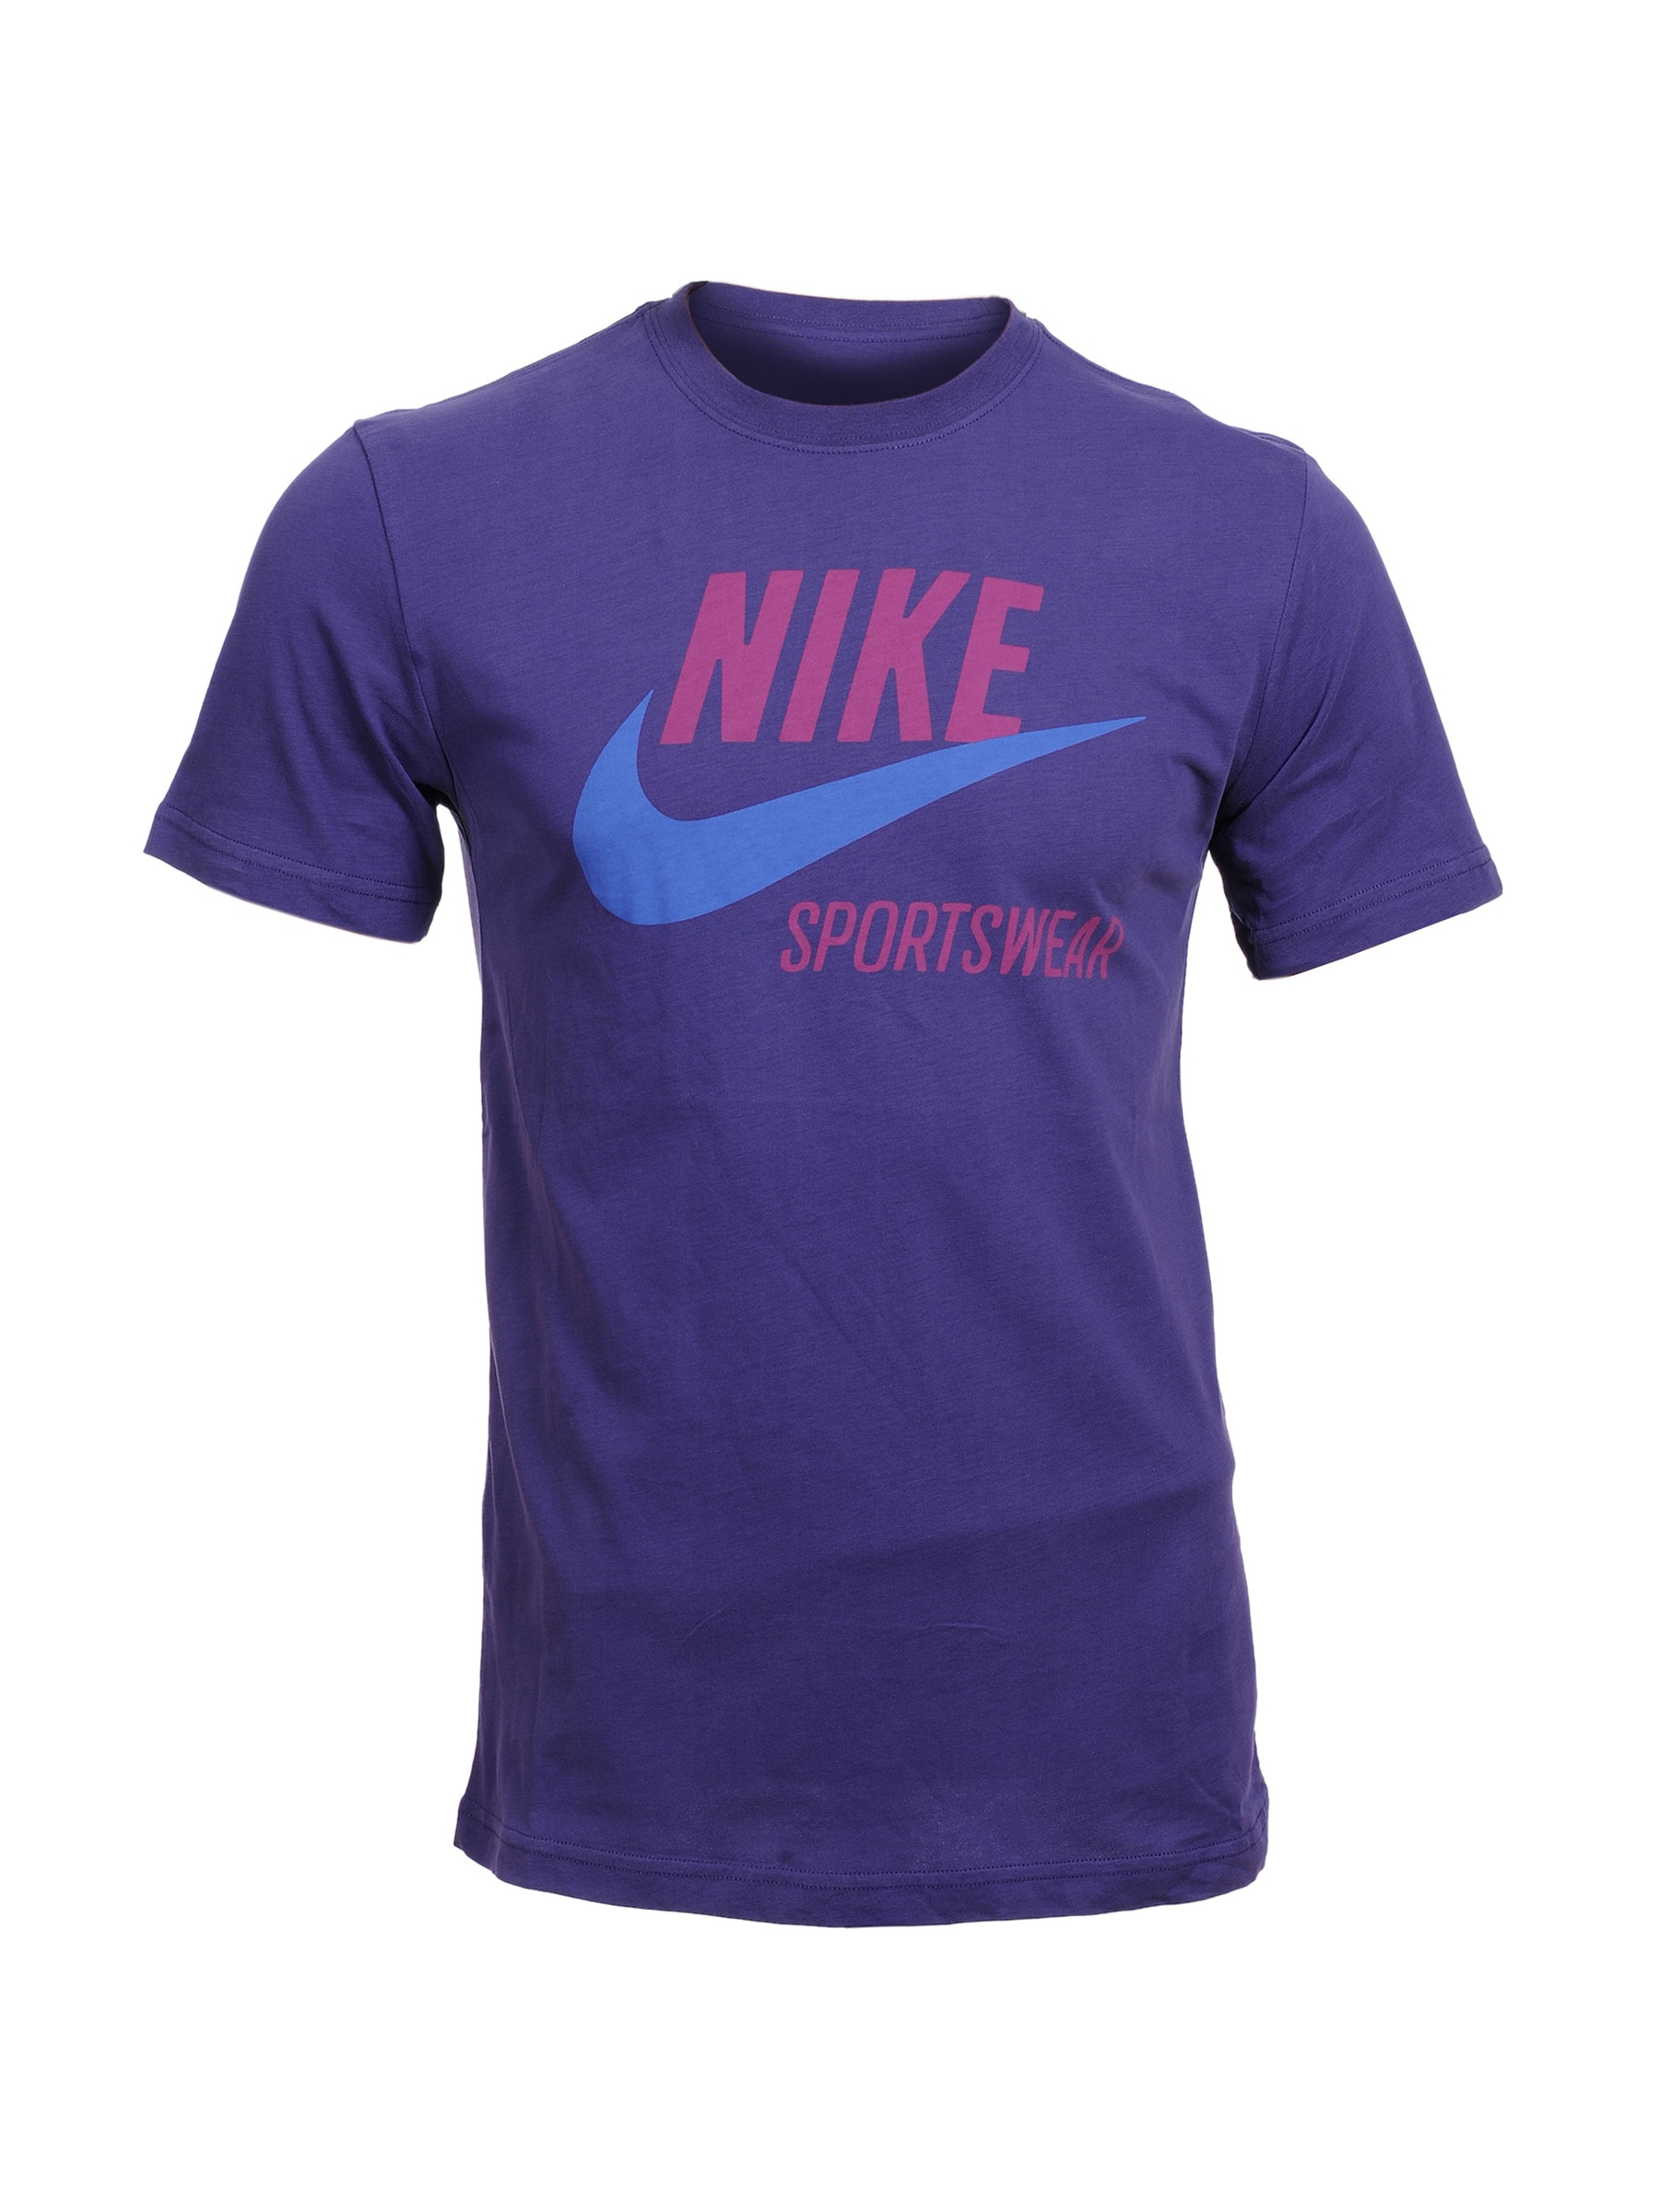 Nike Mens Classic Sportswear T-shirt